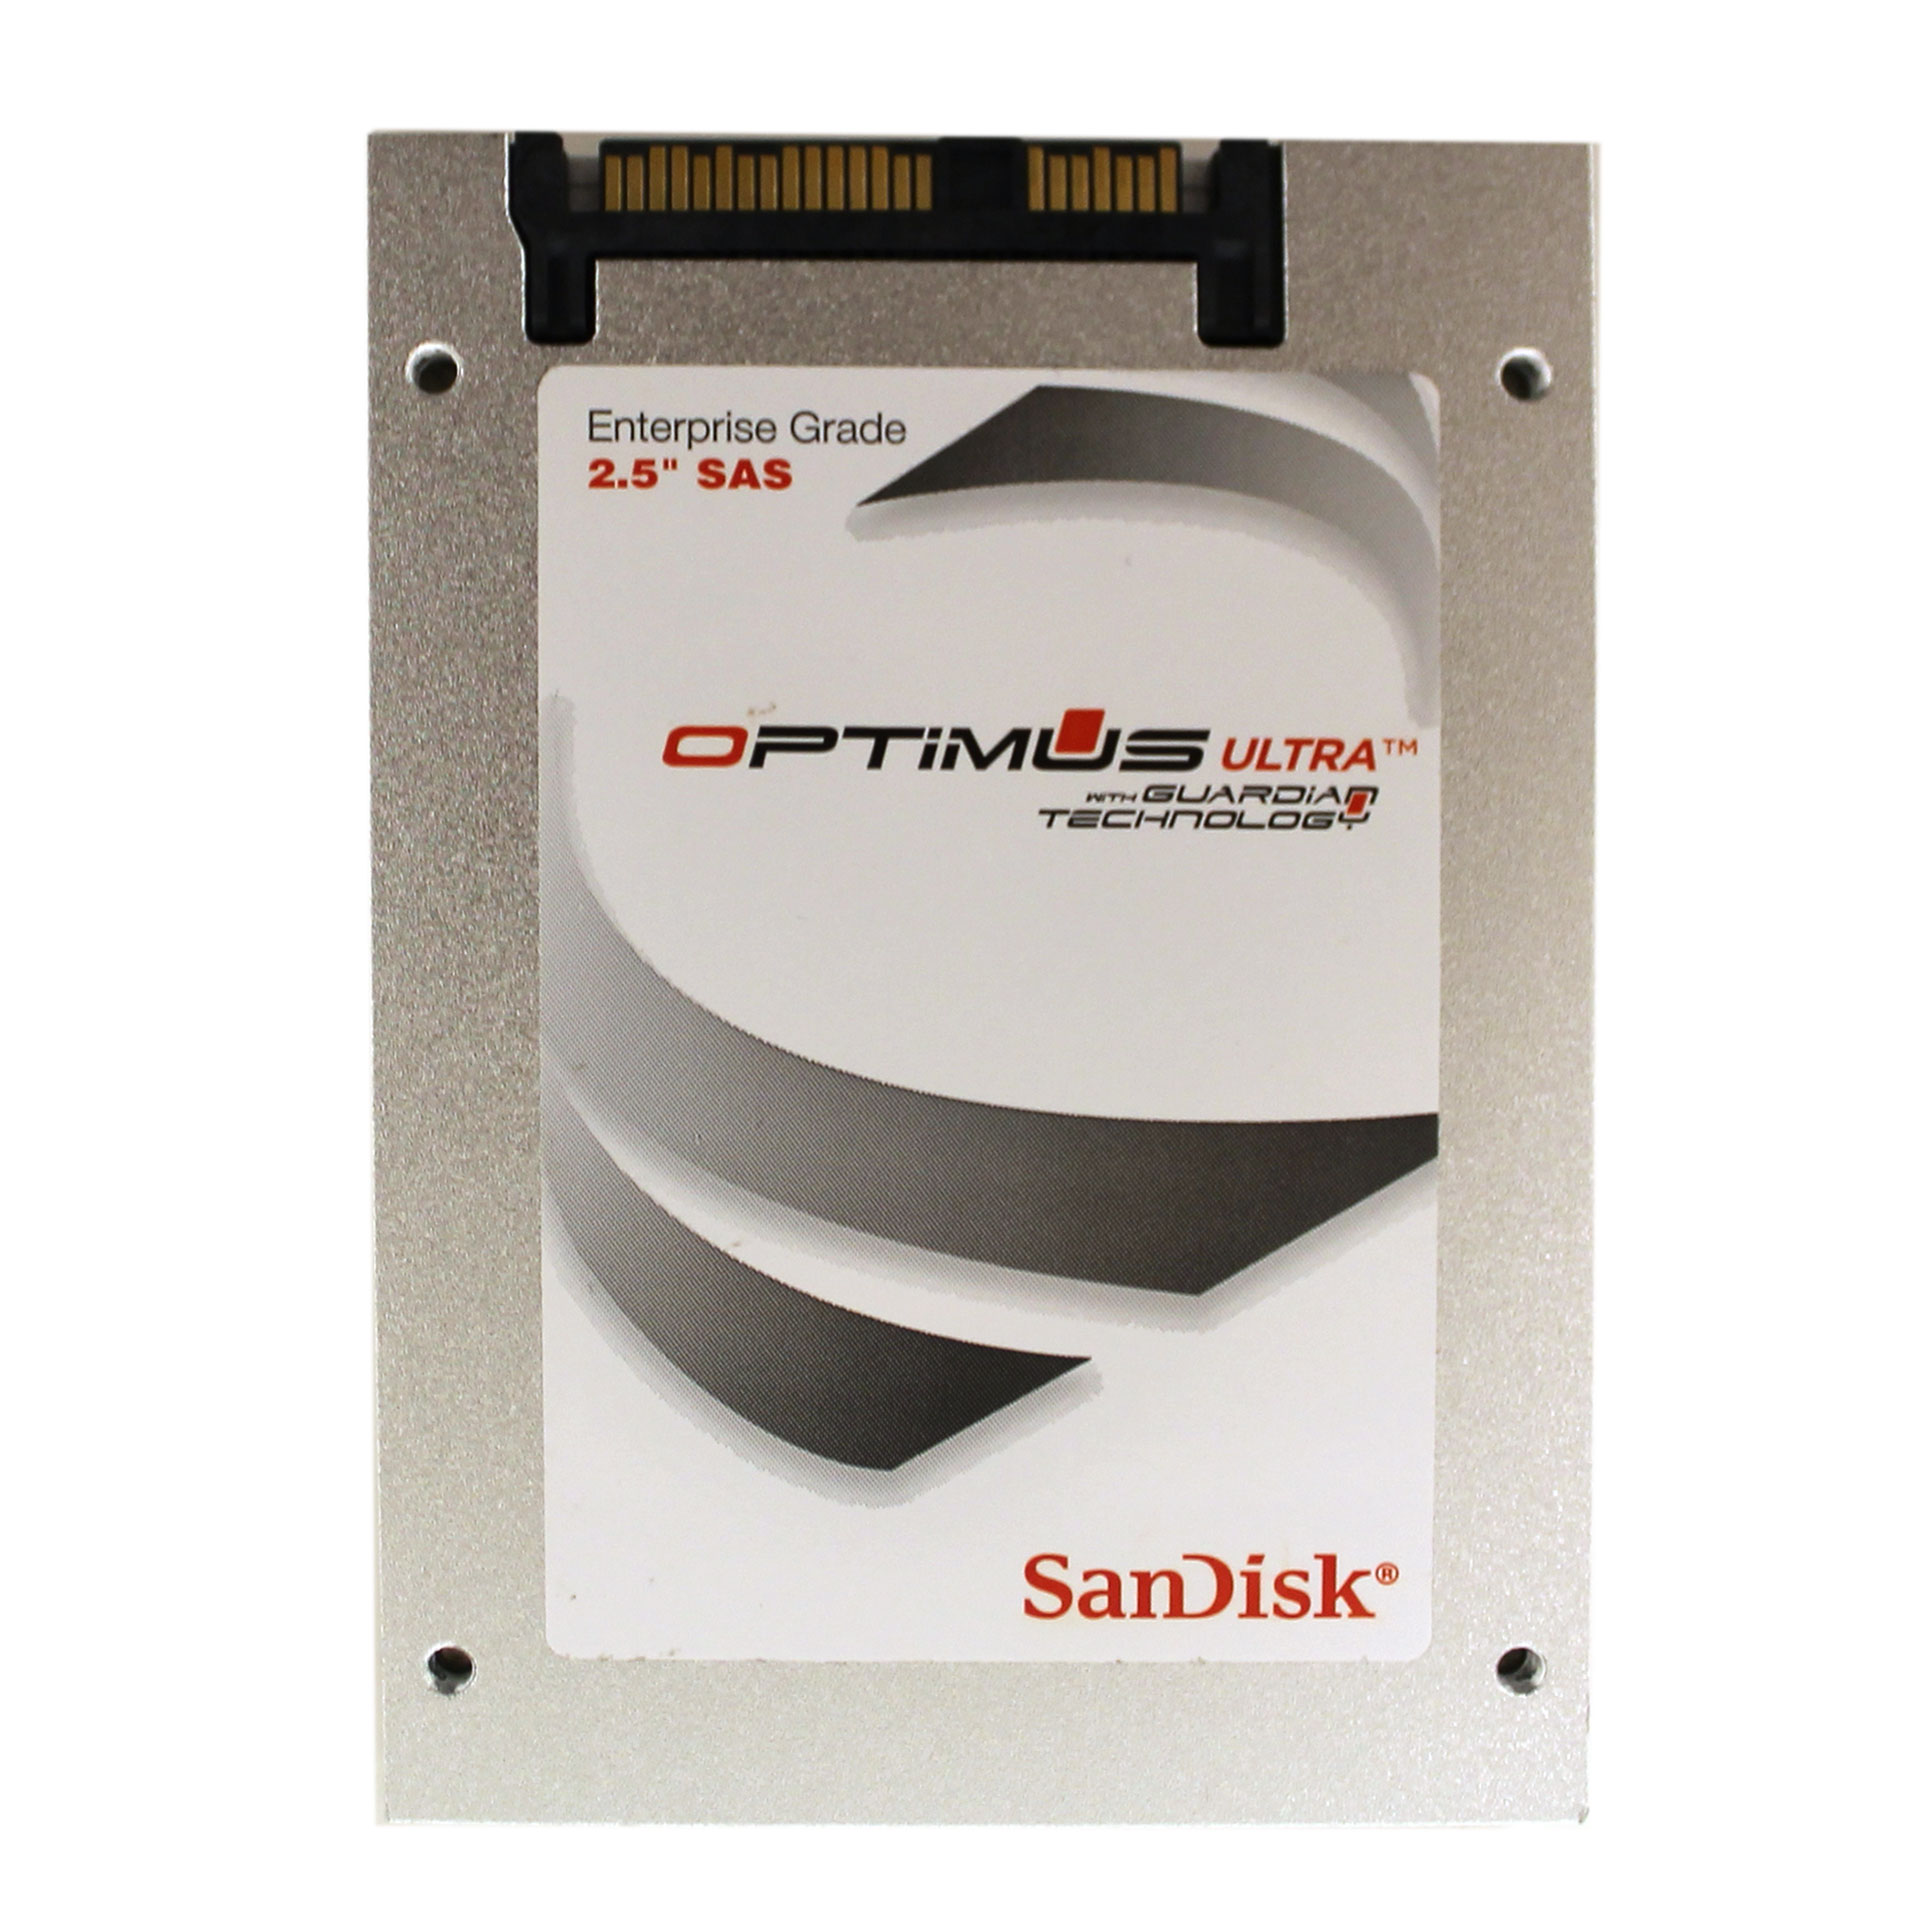 Sandisk Optimus Ultra 150GB SDLKOEGW-150G SAS 2.5" 150GB SSD